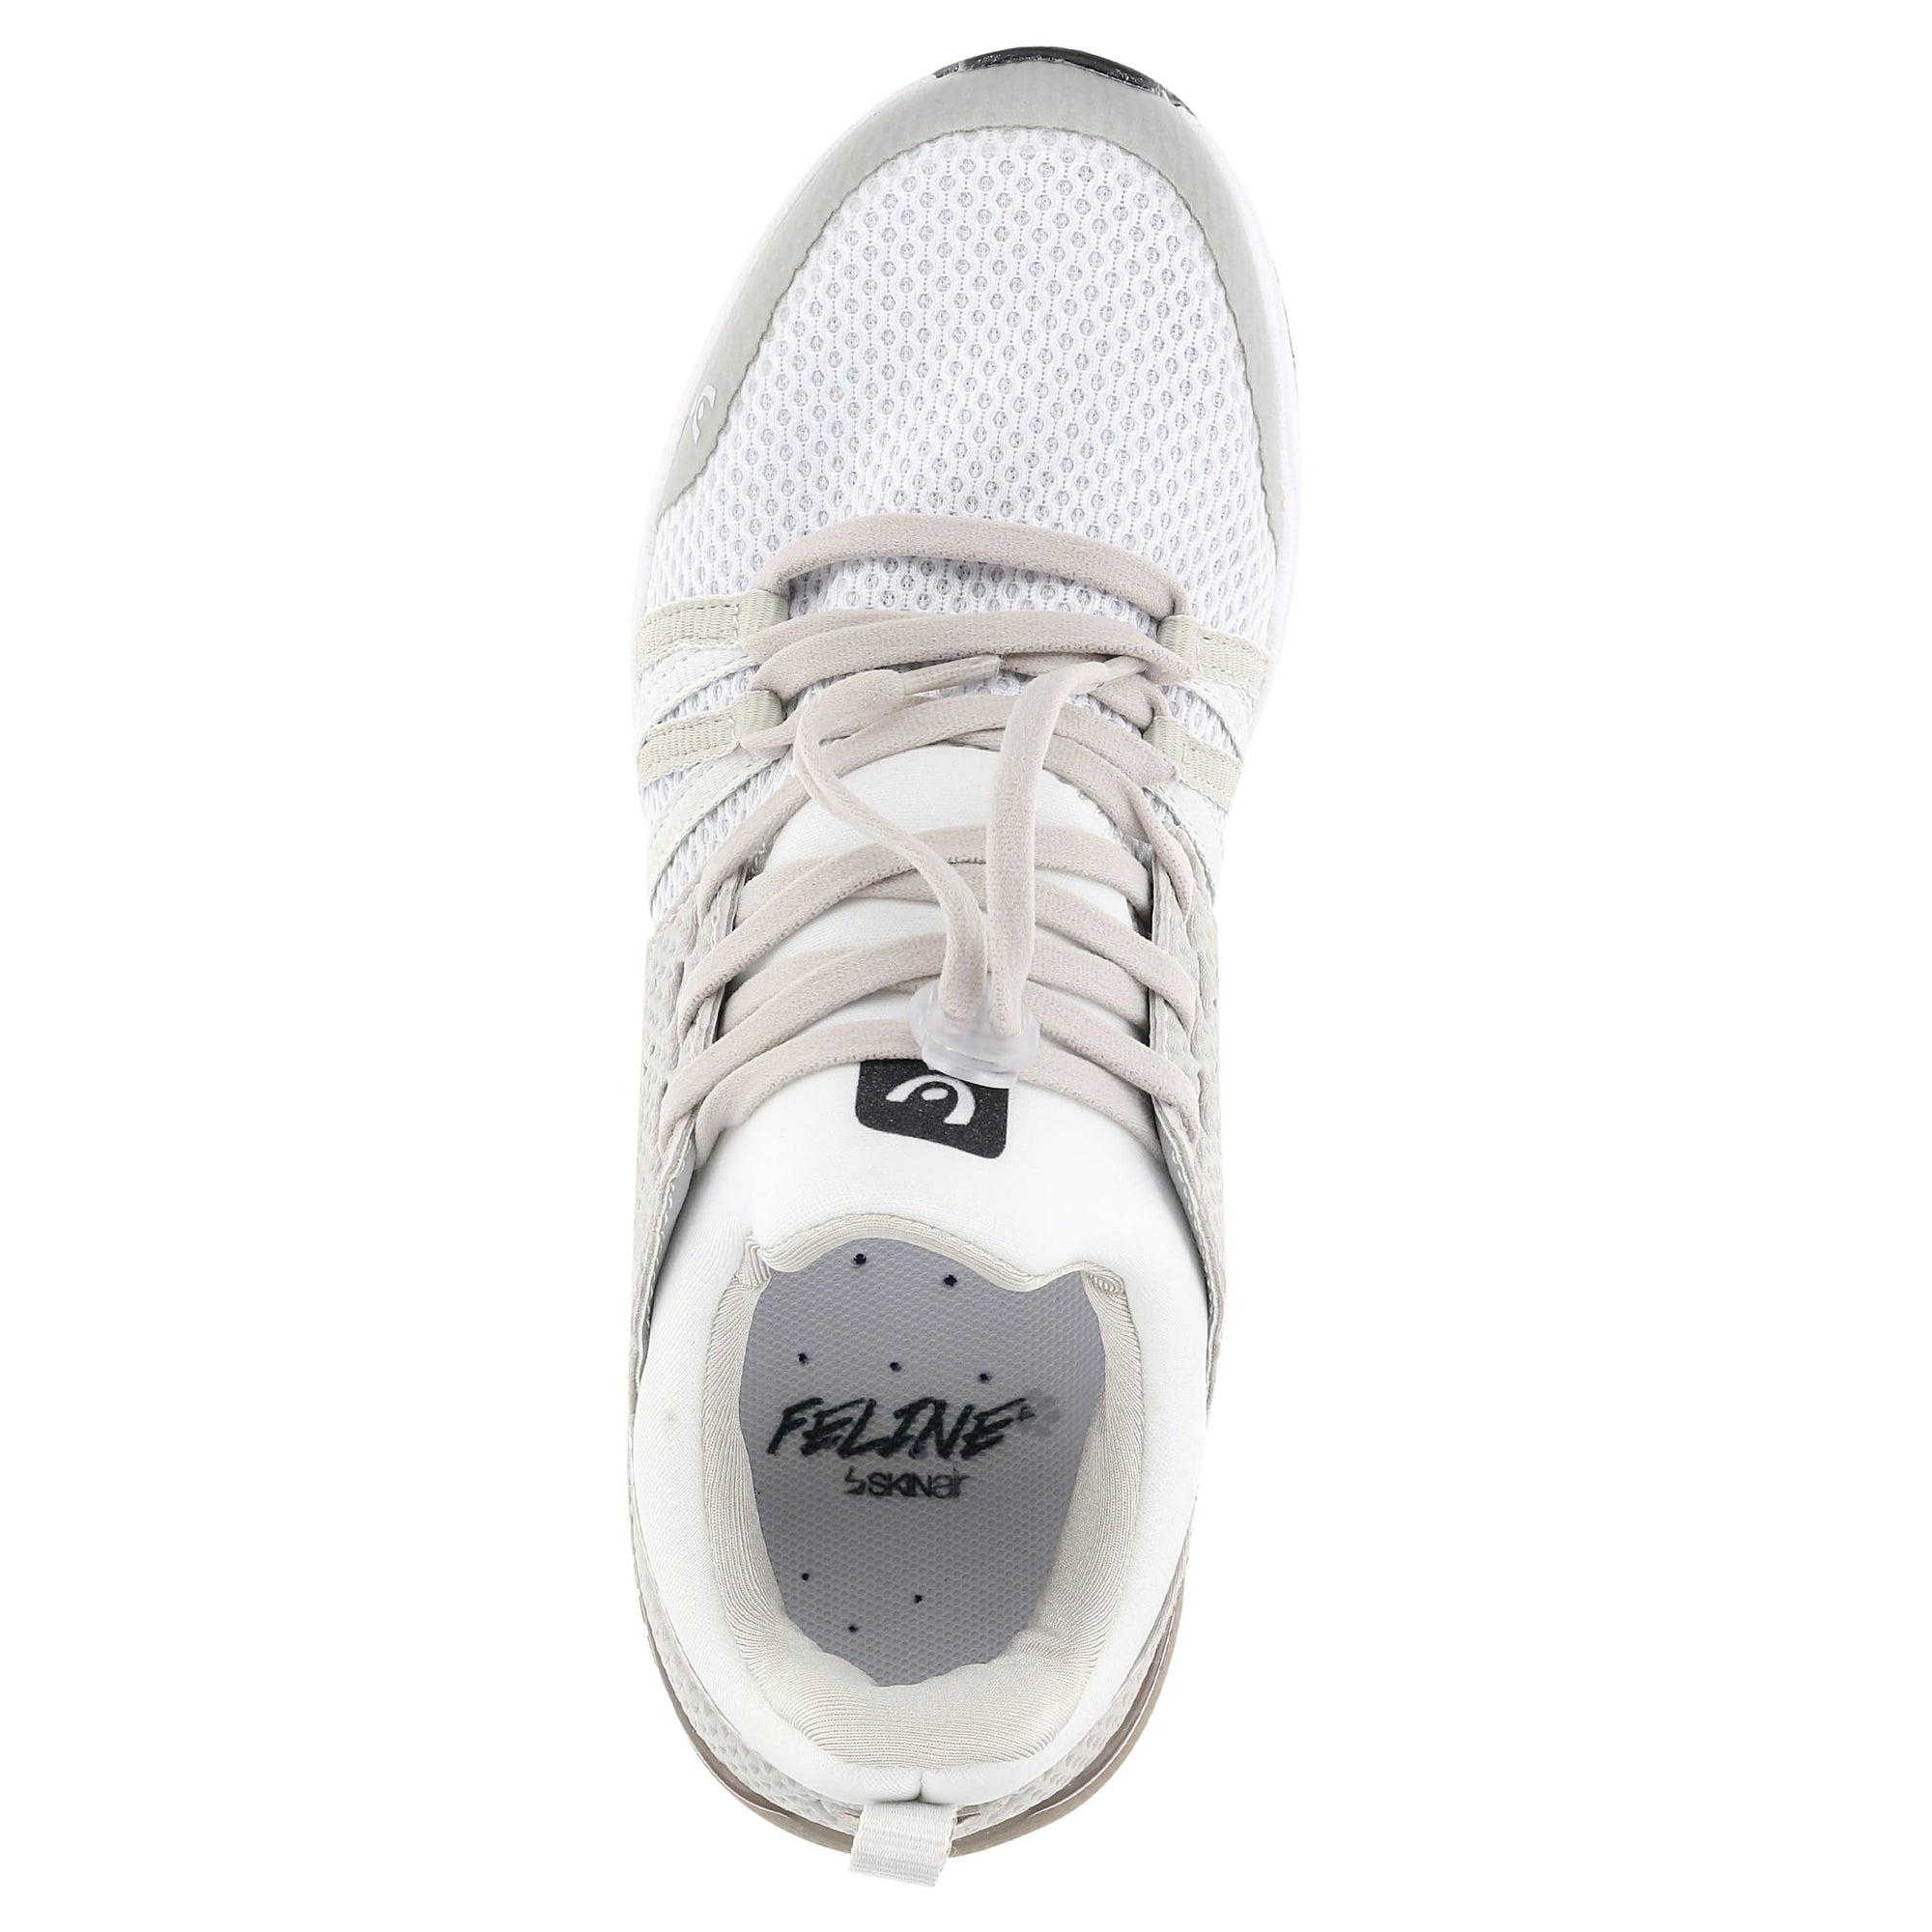 Neon Feline Skinair Active Sport Shoes - White 3